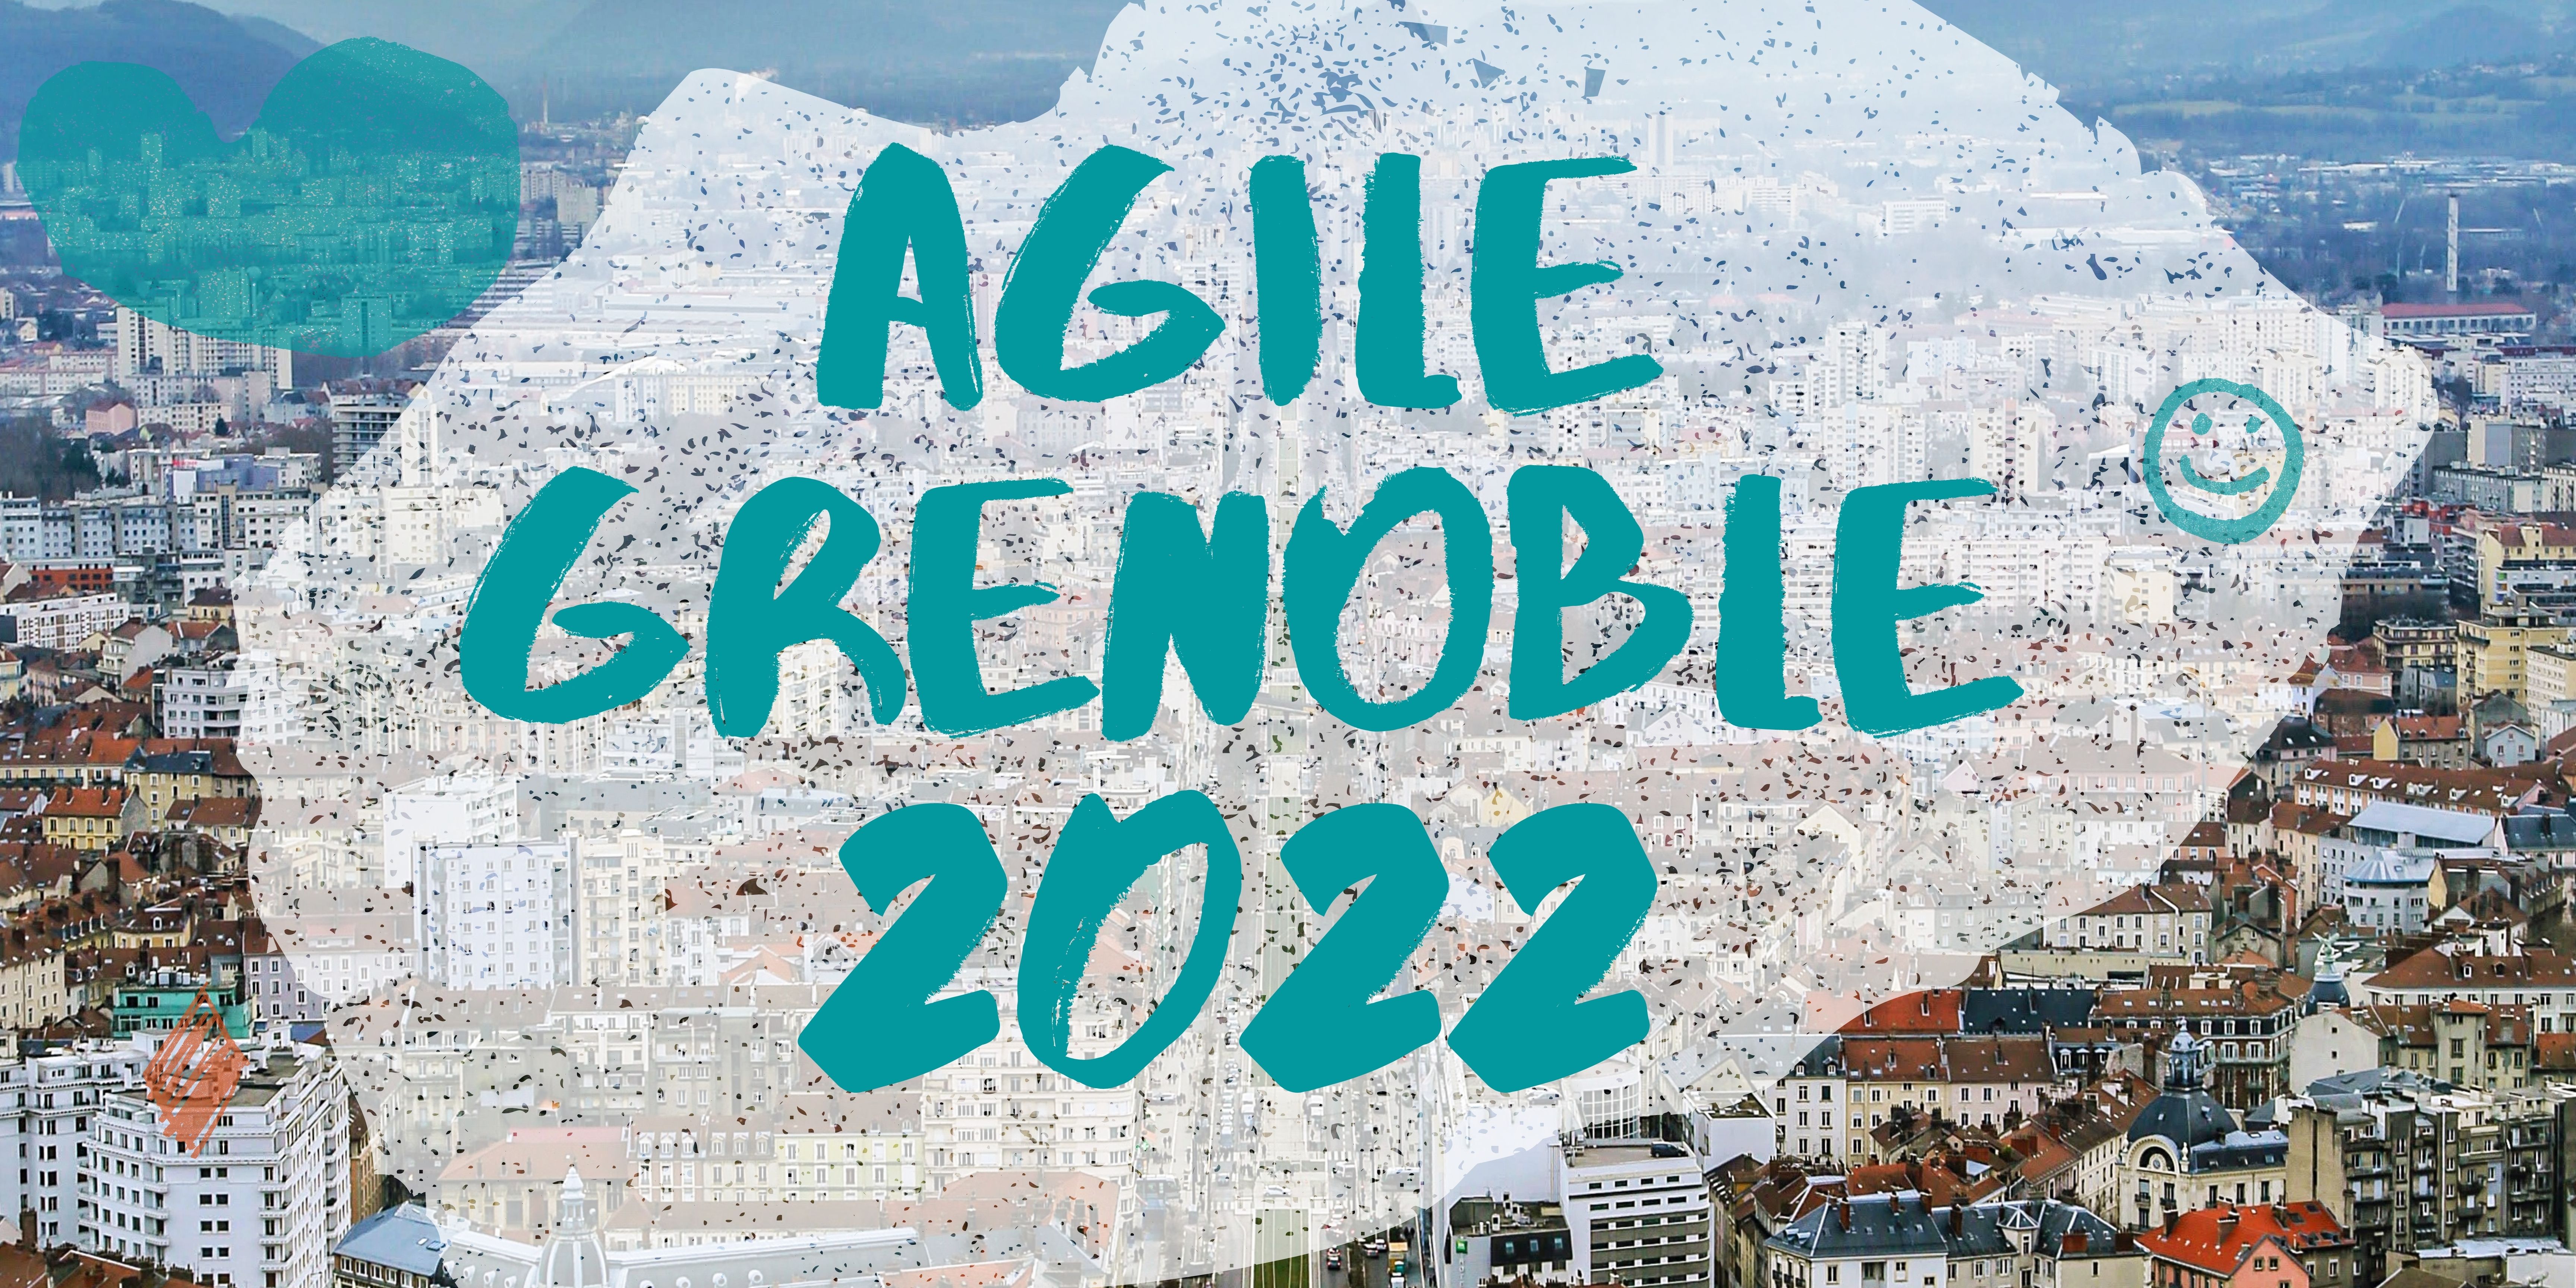 Conférence Agile Grenoble